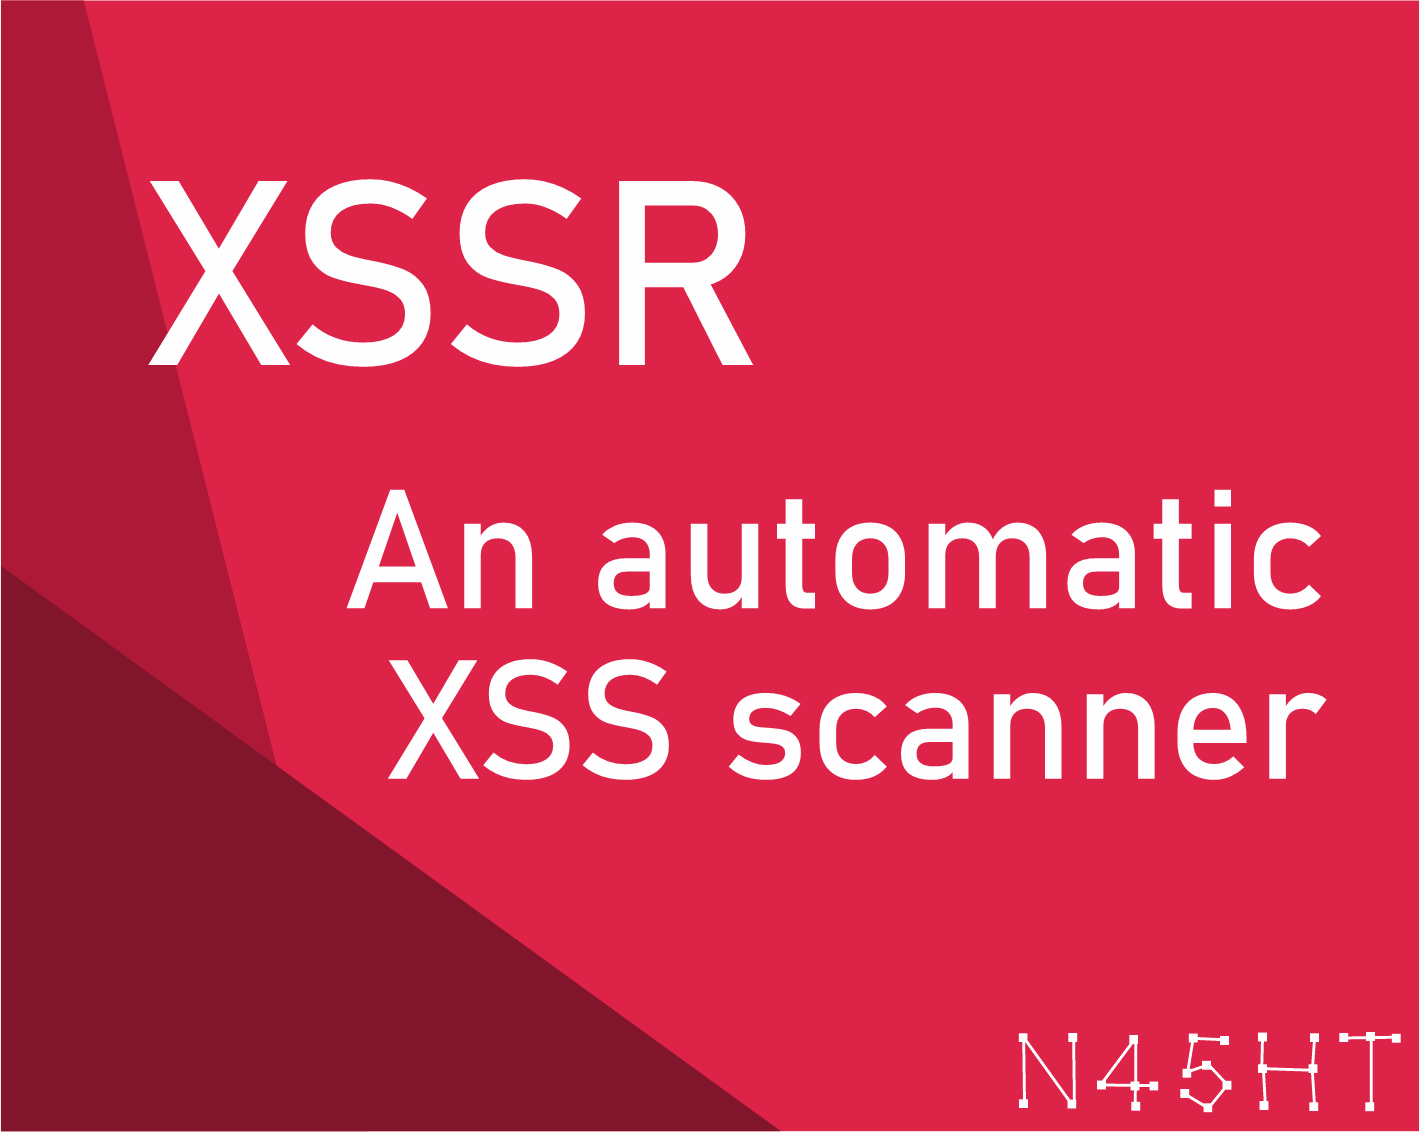 XSSR: An automatic XSS scanner